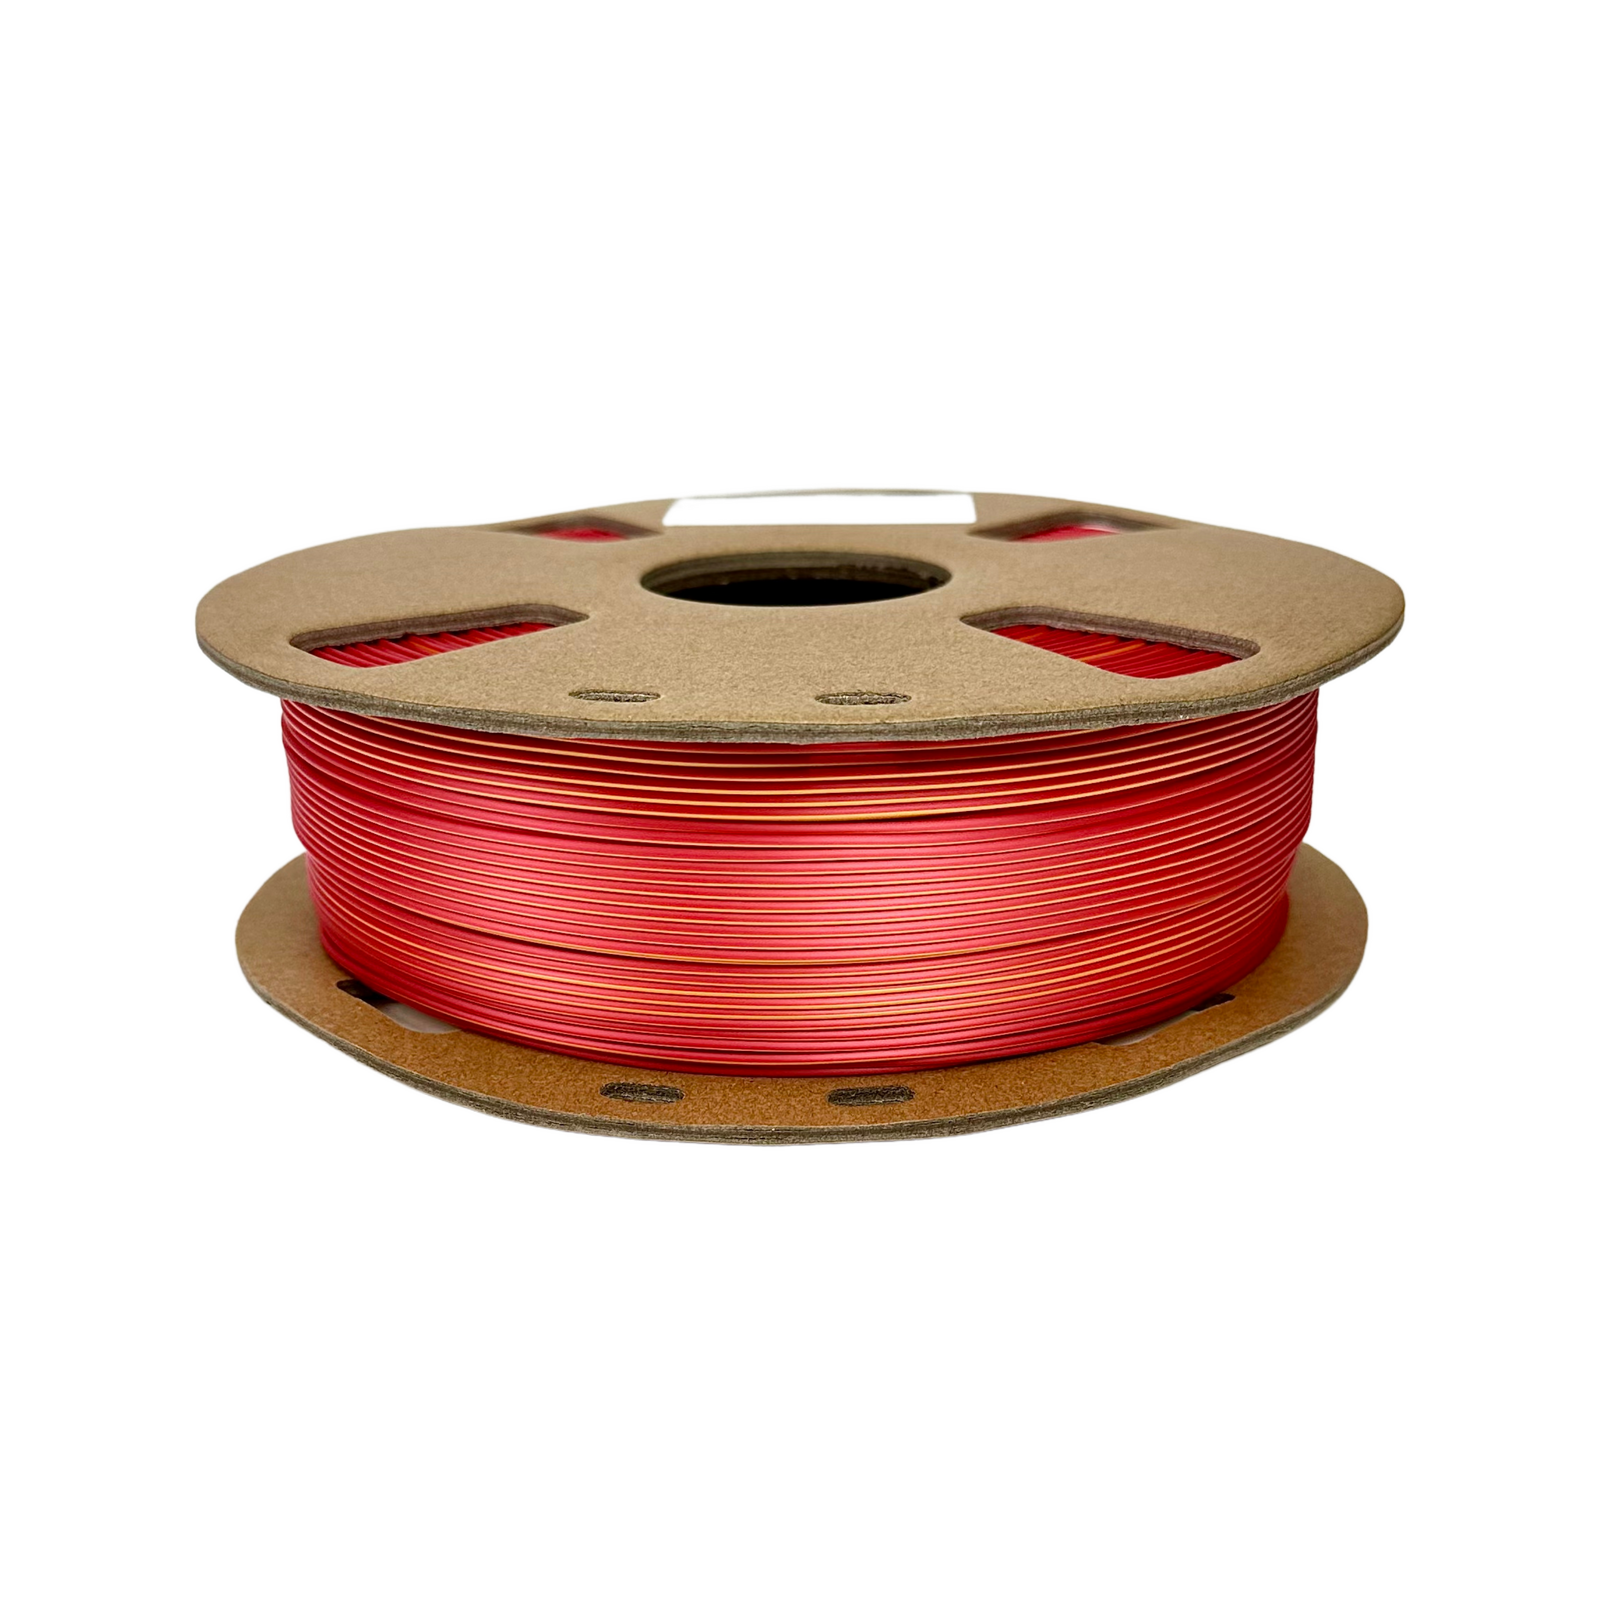 1 x Silk PLA 3D Filament 1.75mm Tricolour Gold & Red & Black - 1KG